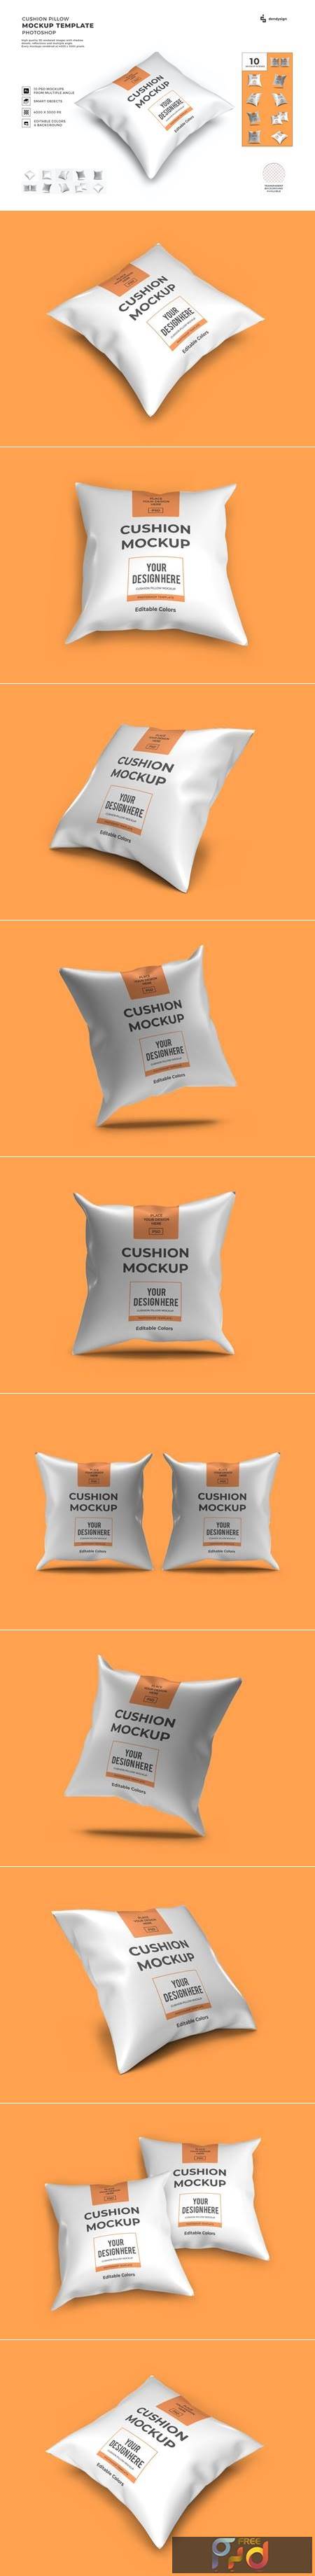 Cushion Pillow Mockup Template Set VZC2Y7Y 1